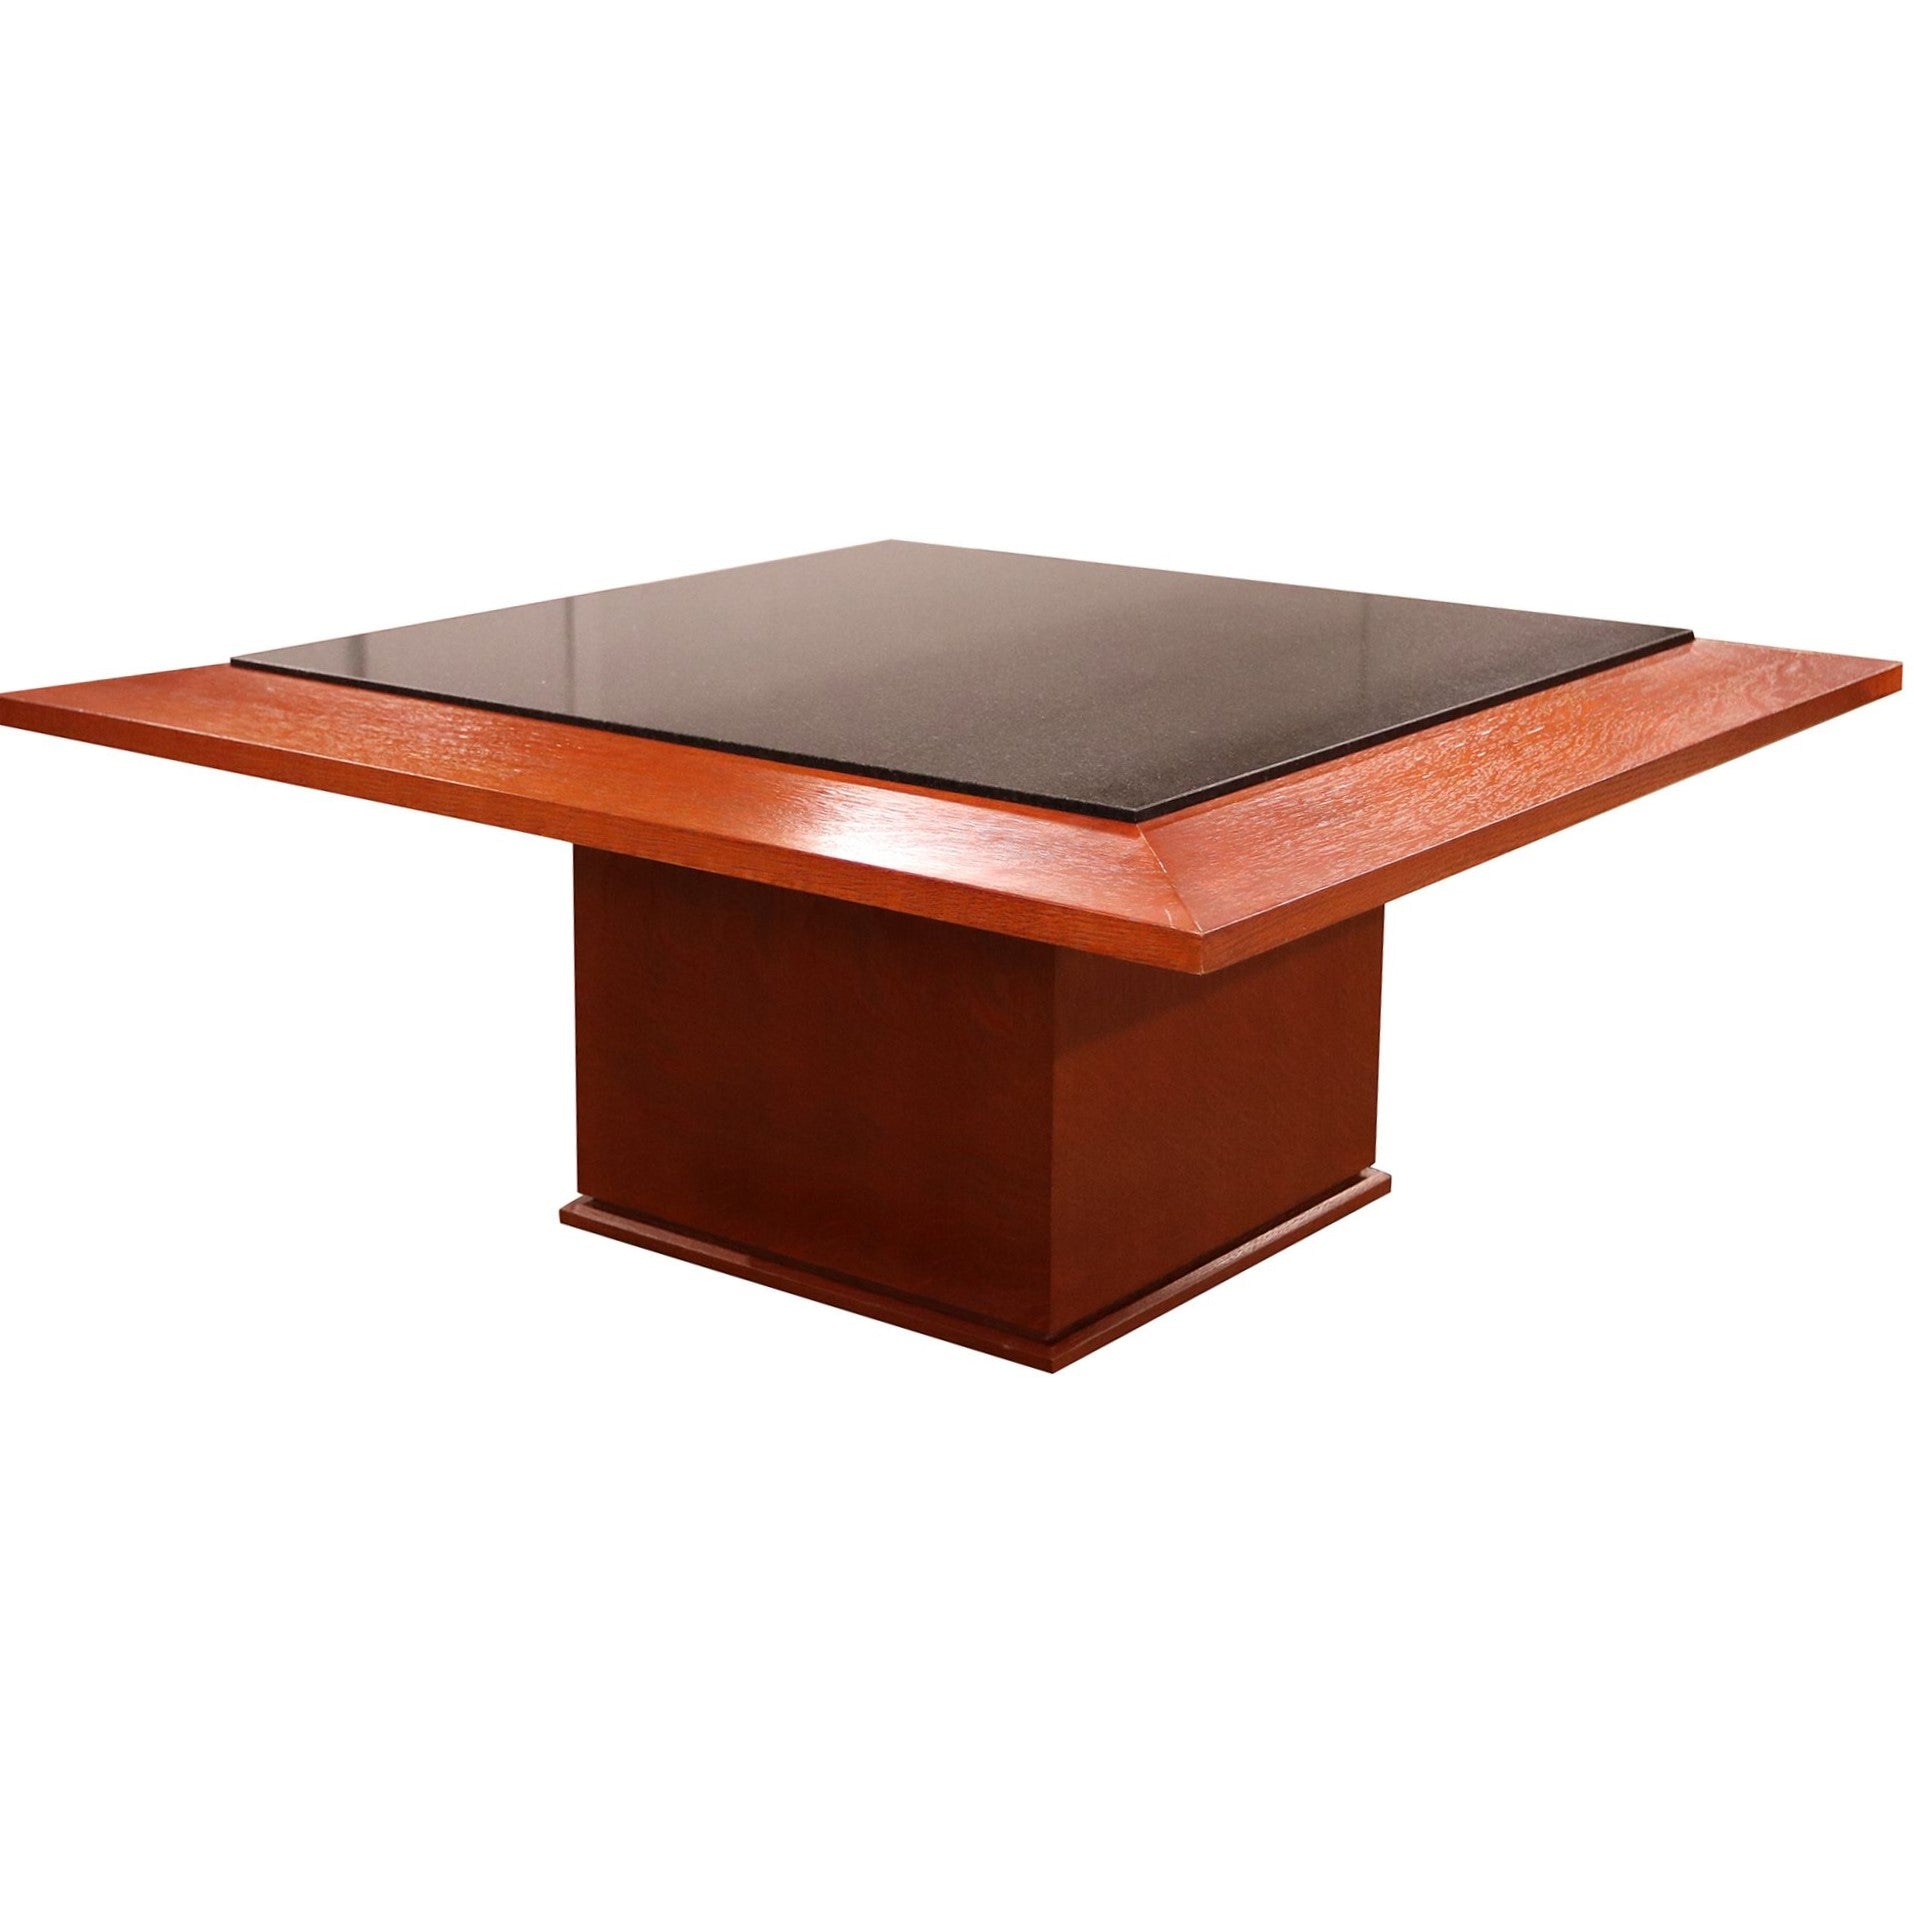 42" Square Granite Coffee Table, Cherry - Preowned